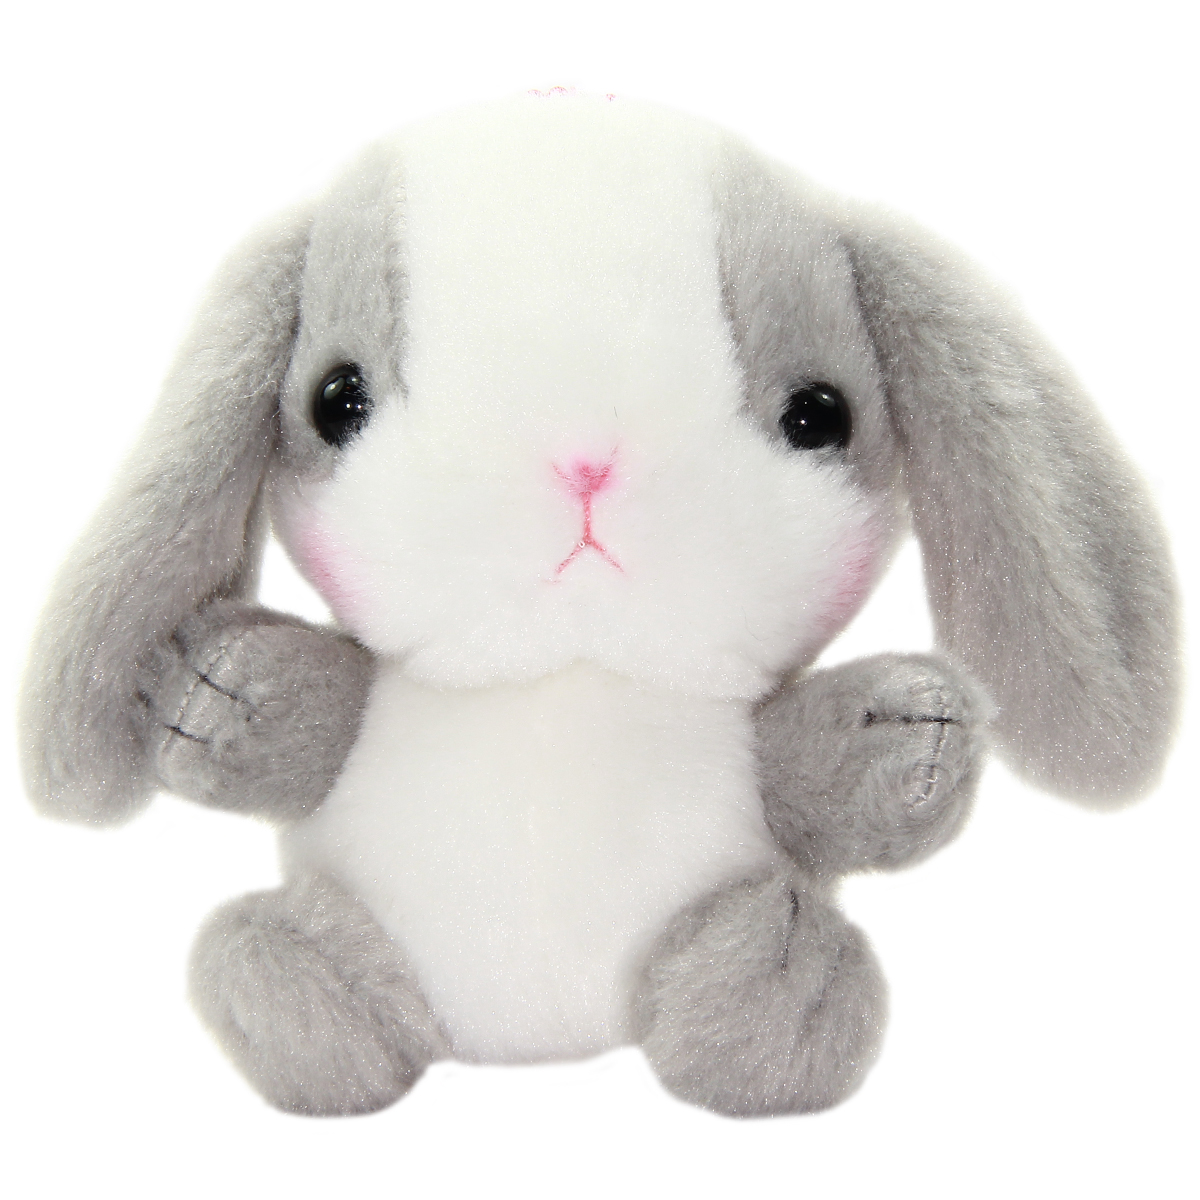 grey bunny toy